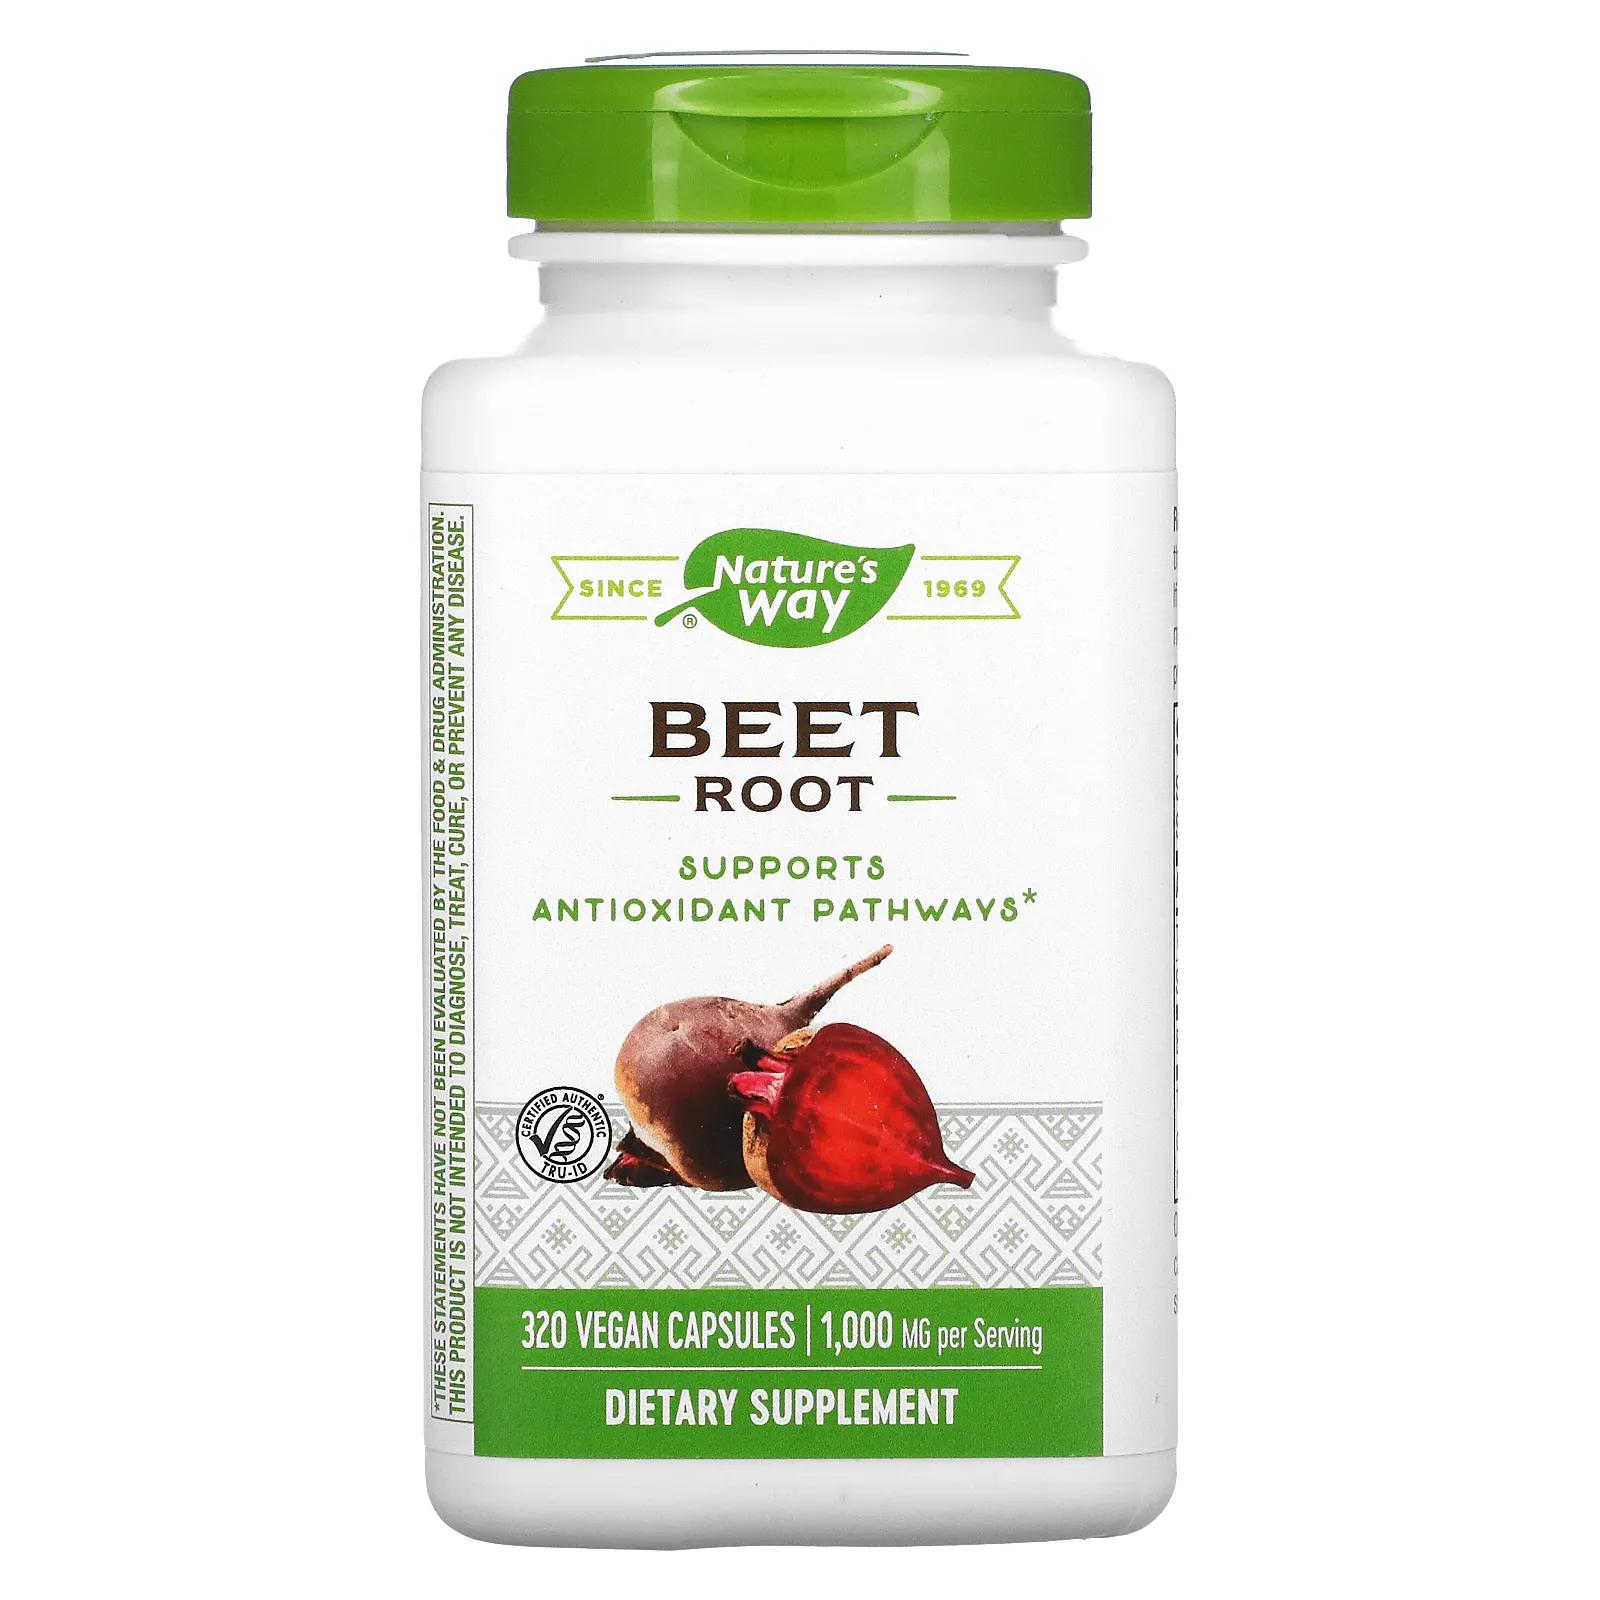 Nature's Way Beet Root 500 mg 320 Vetegarian Capsules